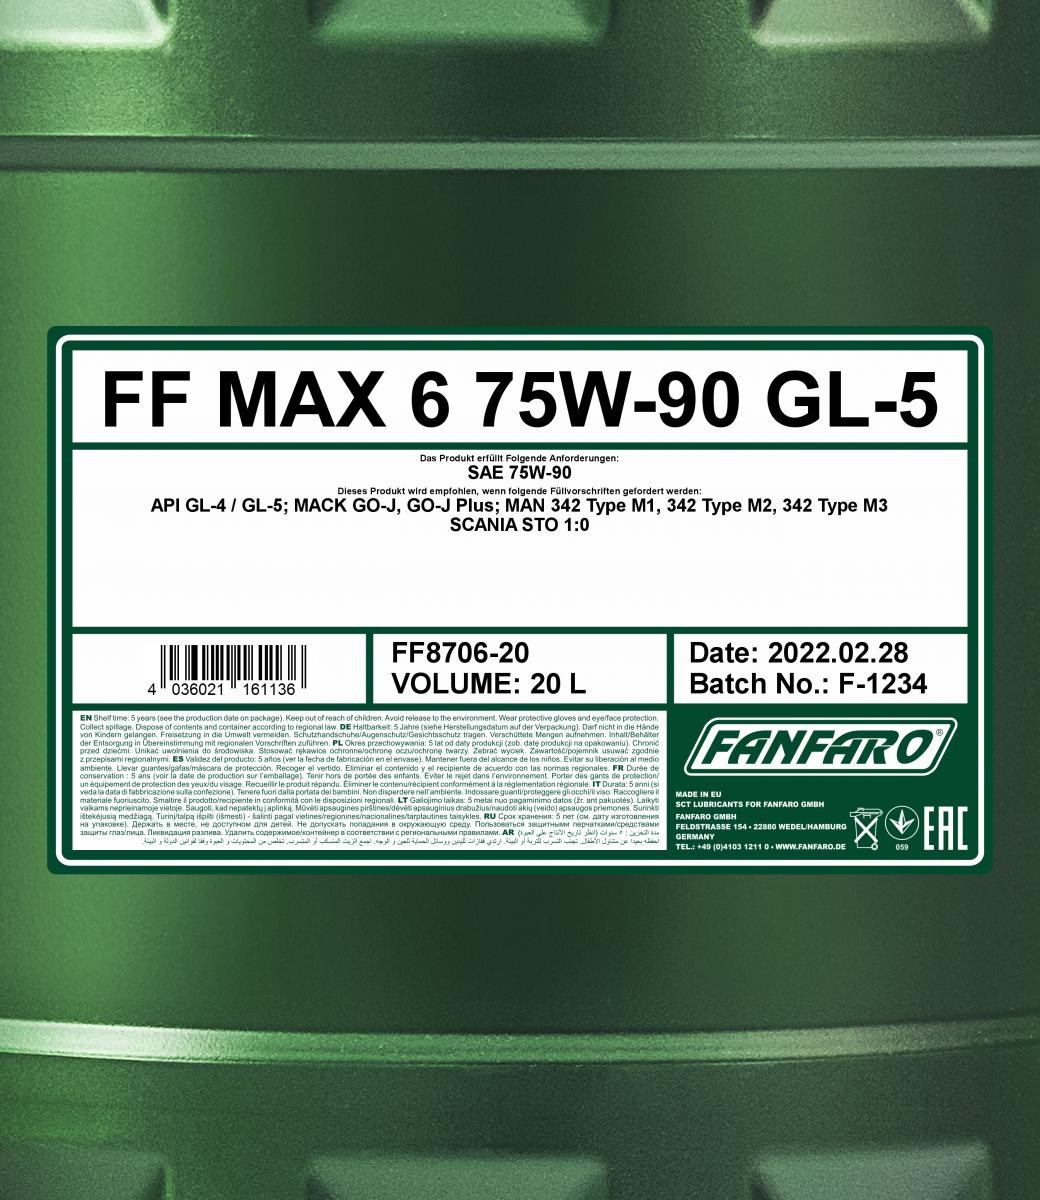 FANFARO Manual Transmission Oil FF8706-20